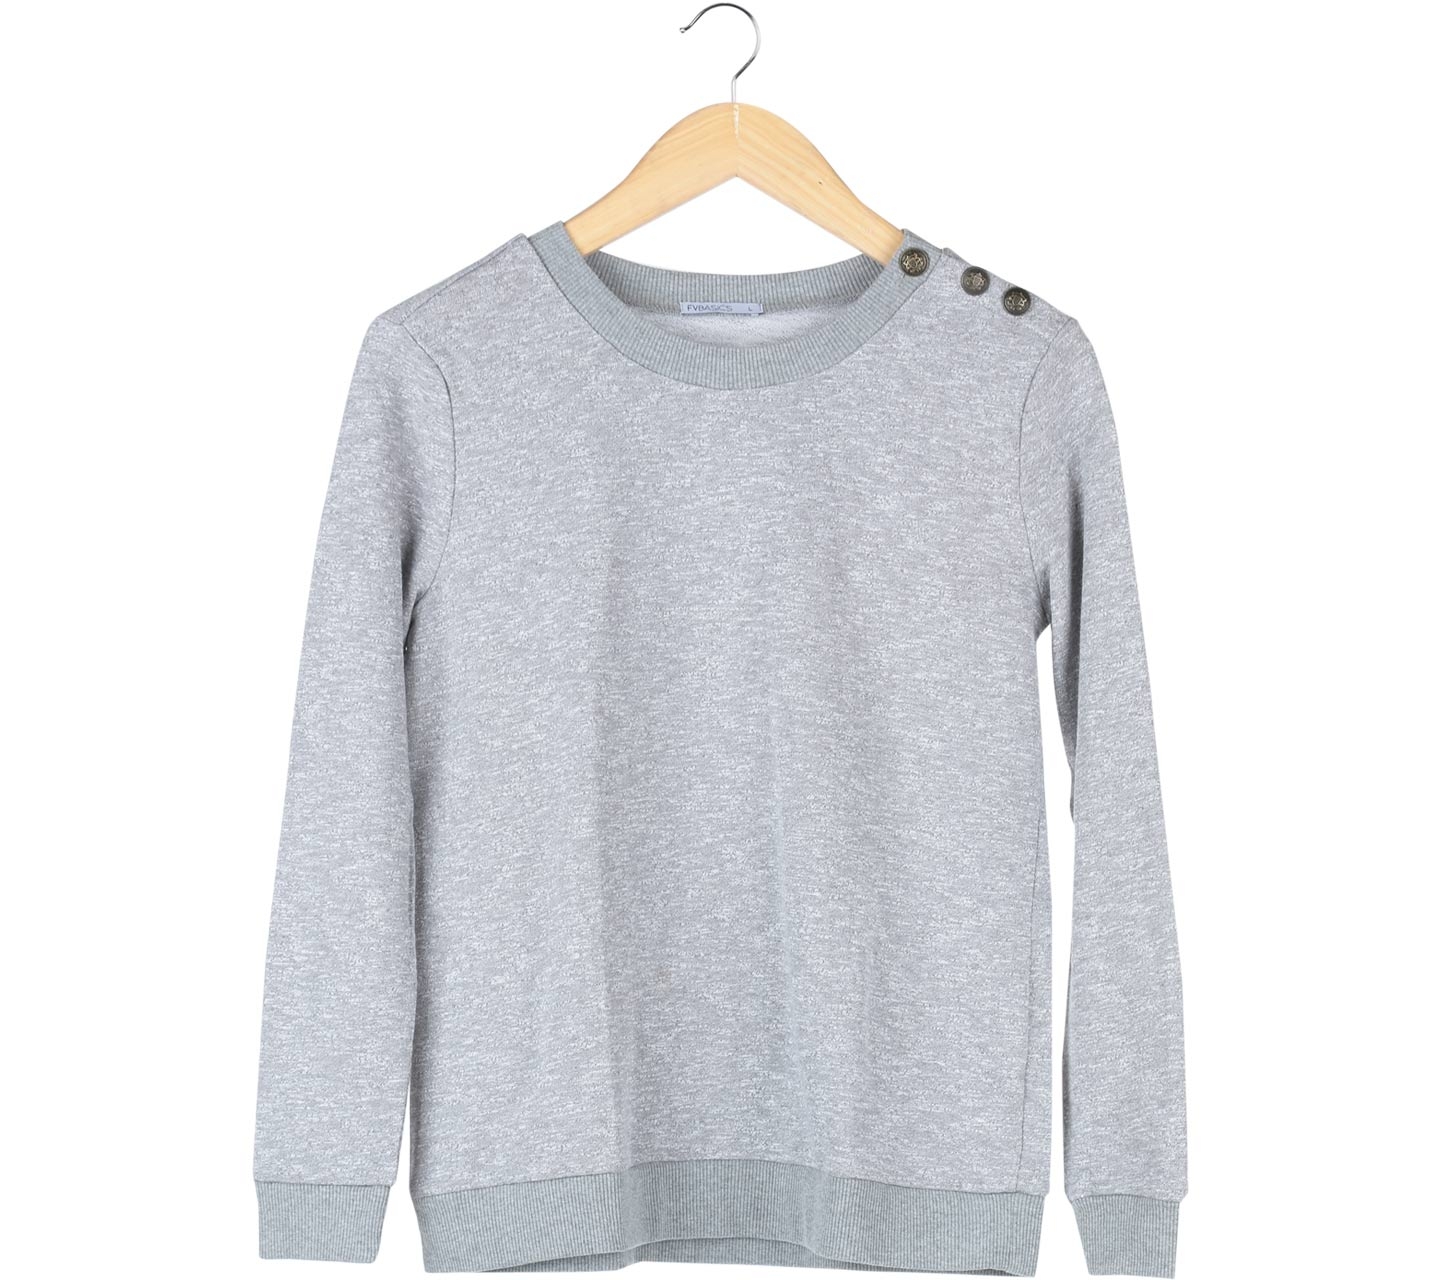 FvBasics Grey Sweater